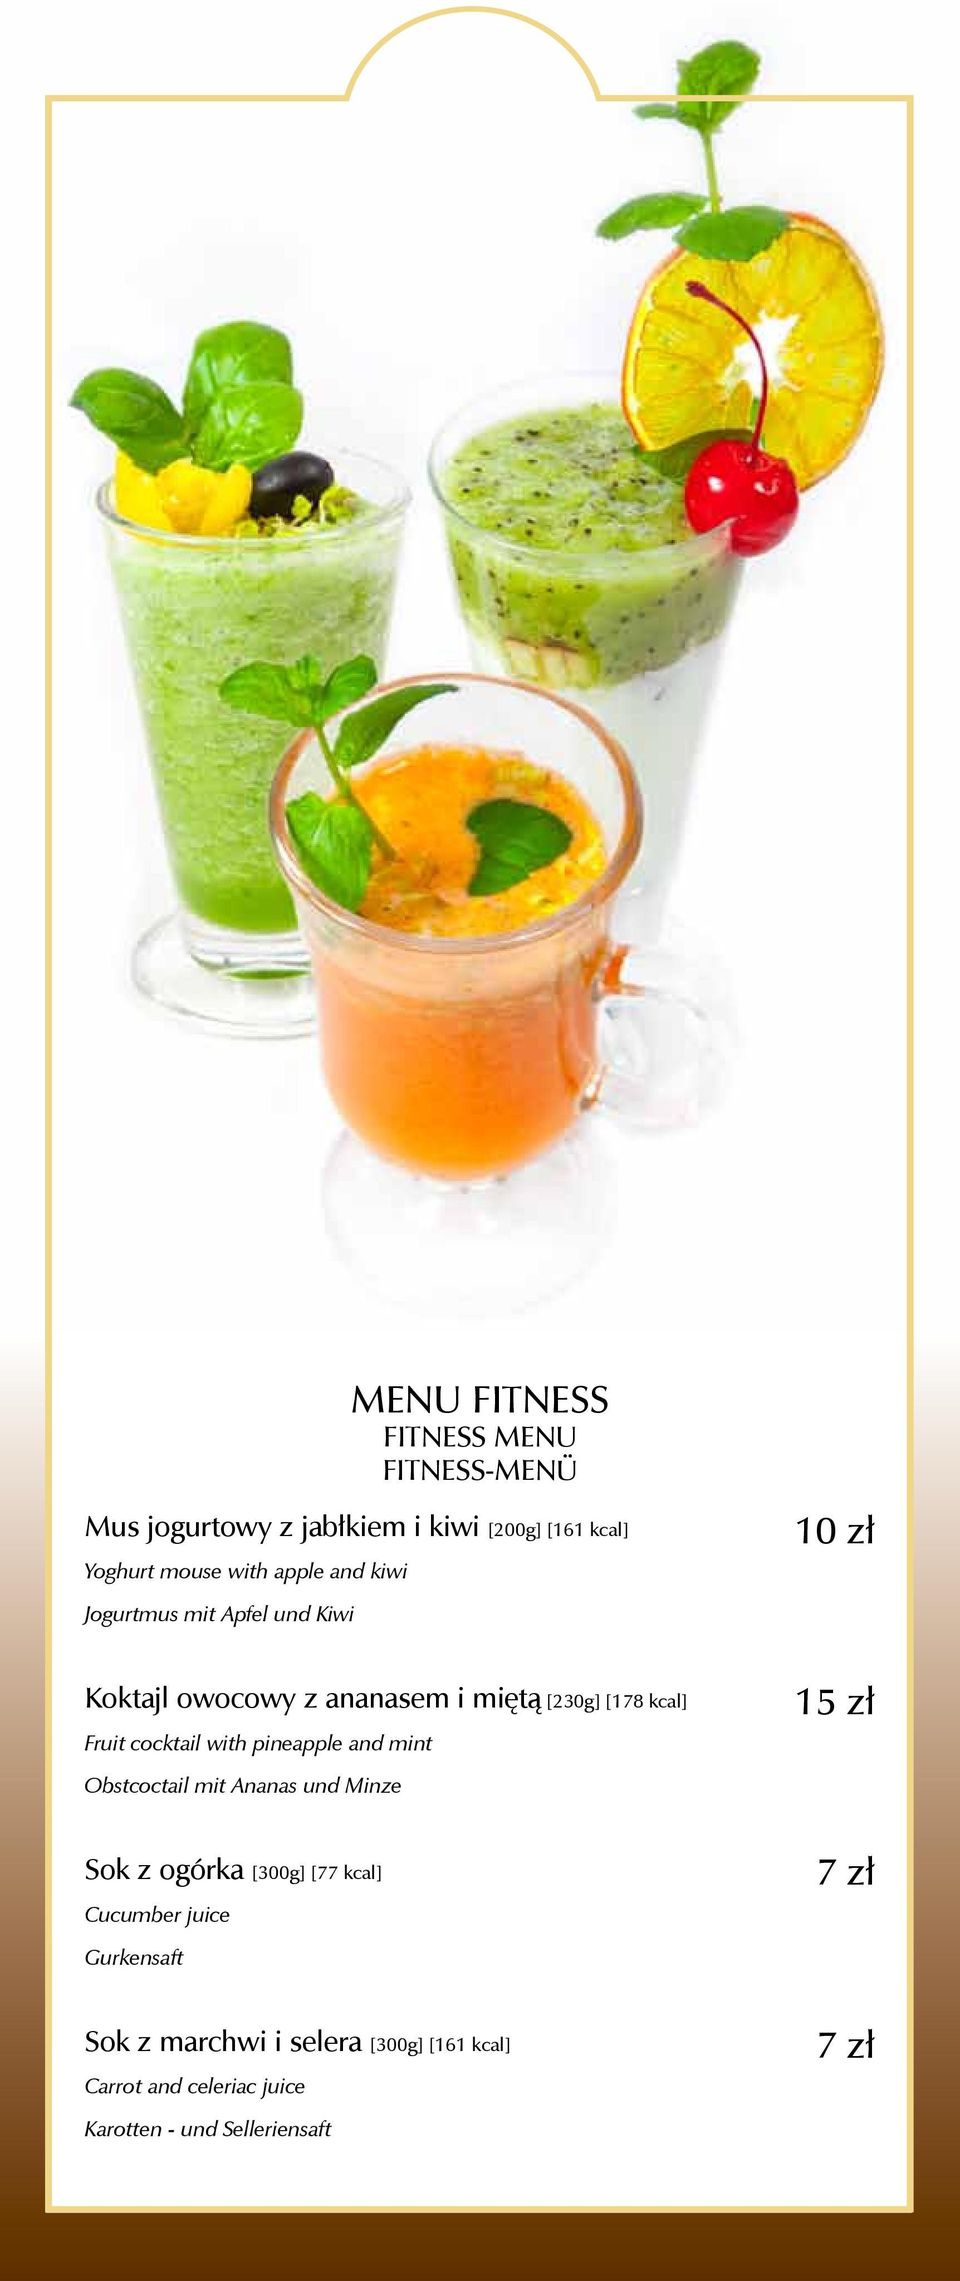 cocktail with pineapple and mint 15 zł Obstcoctail mit Ananas und Minze Sok z ogórka [300g] [77 kcal] Cucumber